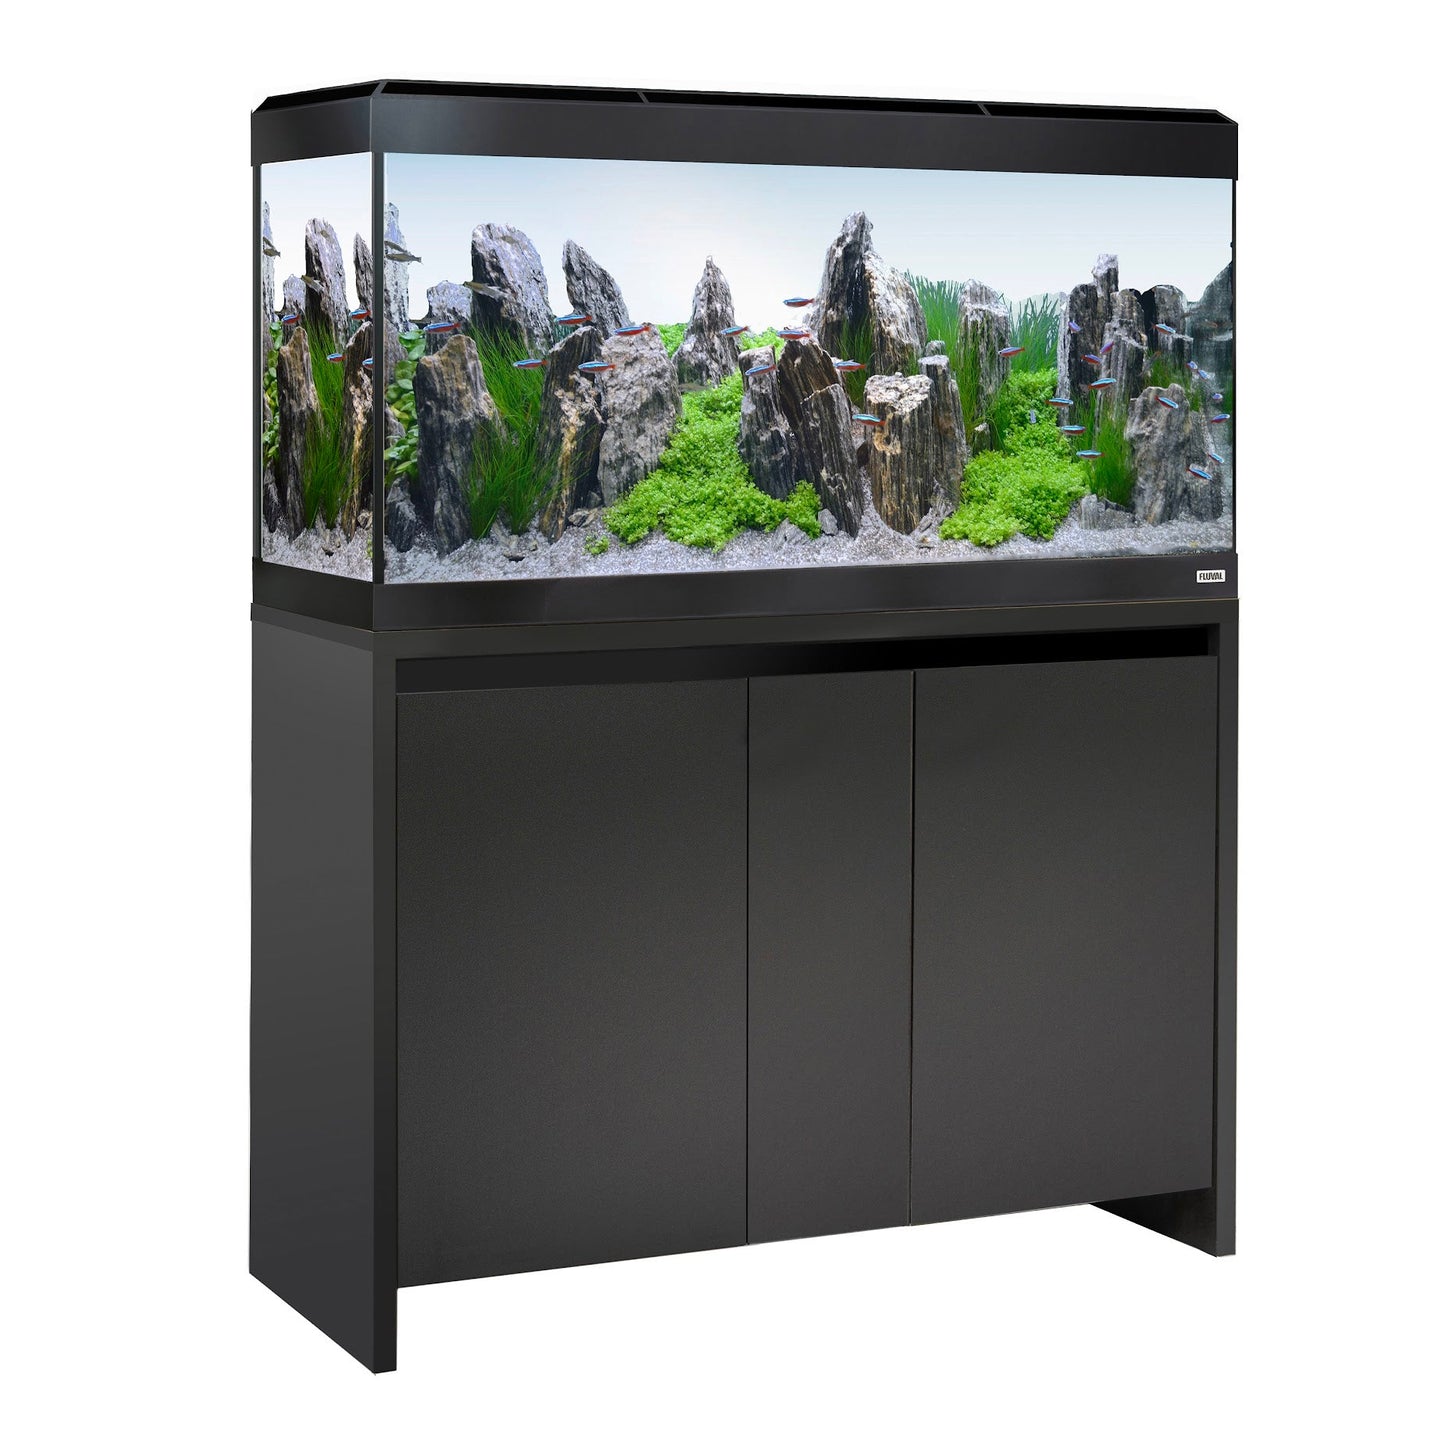 Fluval Roma Bluetooth LED 200 Aquarium and Cabinet - Black - Charterhouse Aquatics